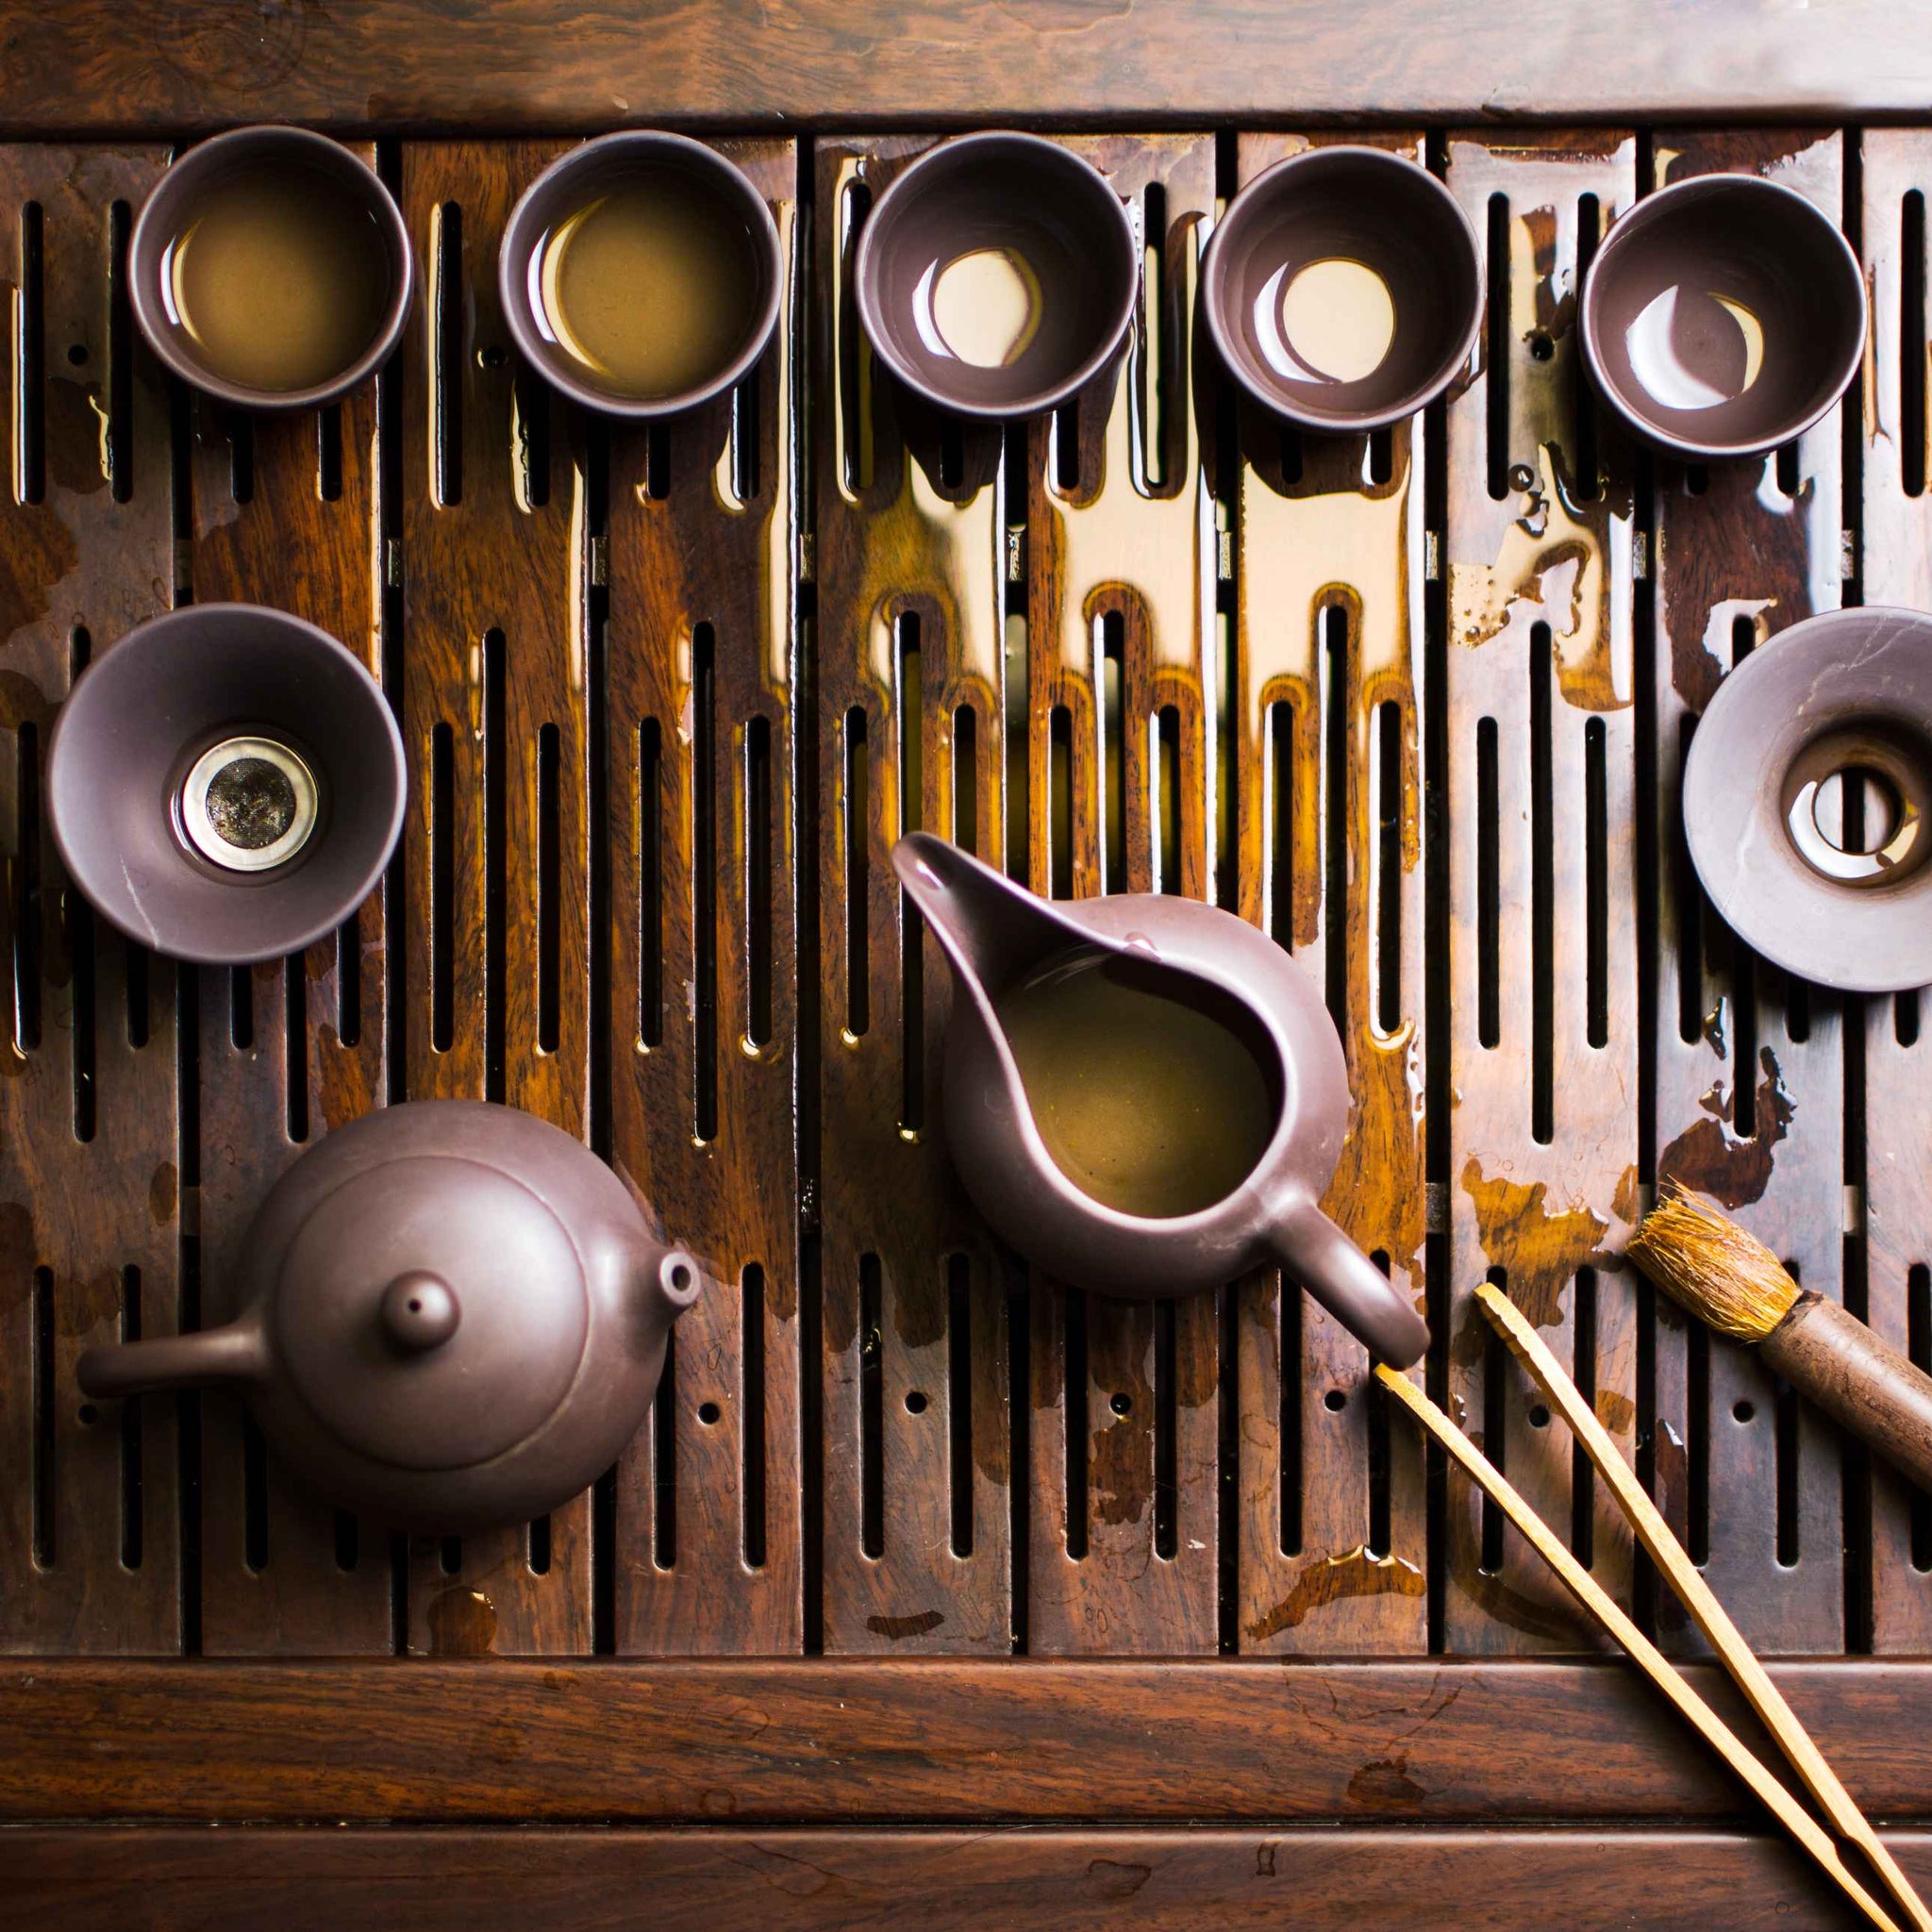 Gongfu tea (part II): Tools and ceremony